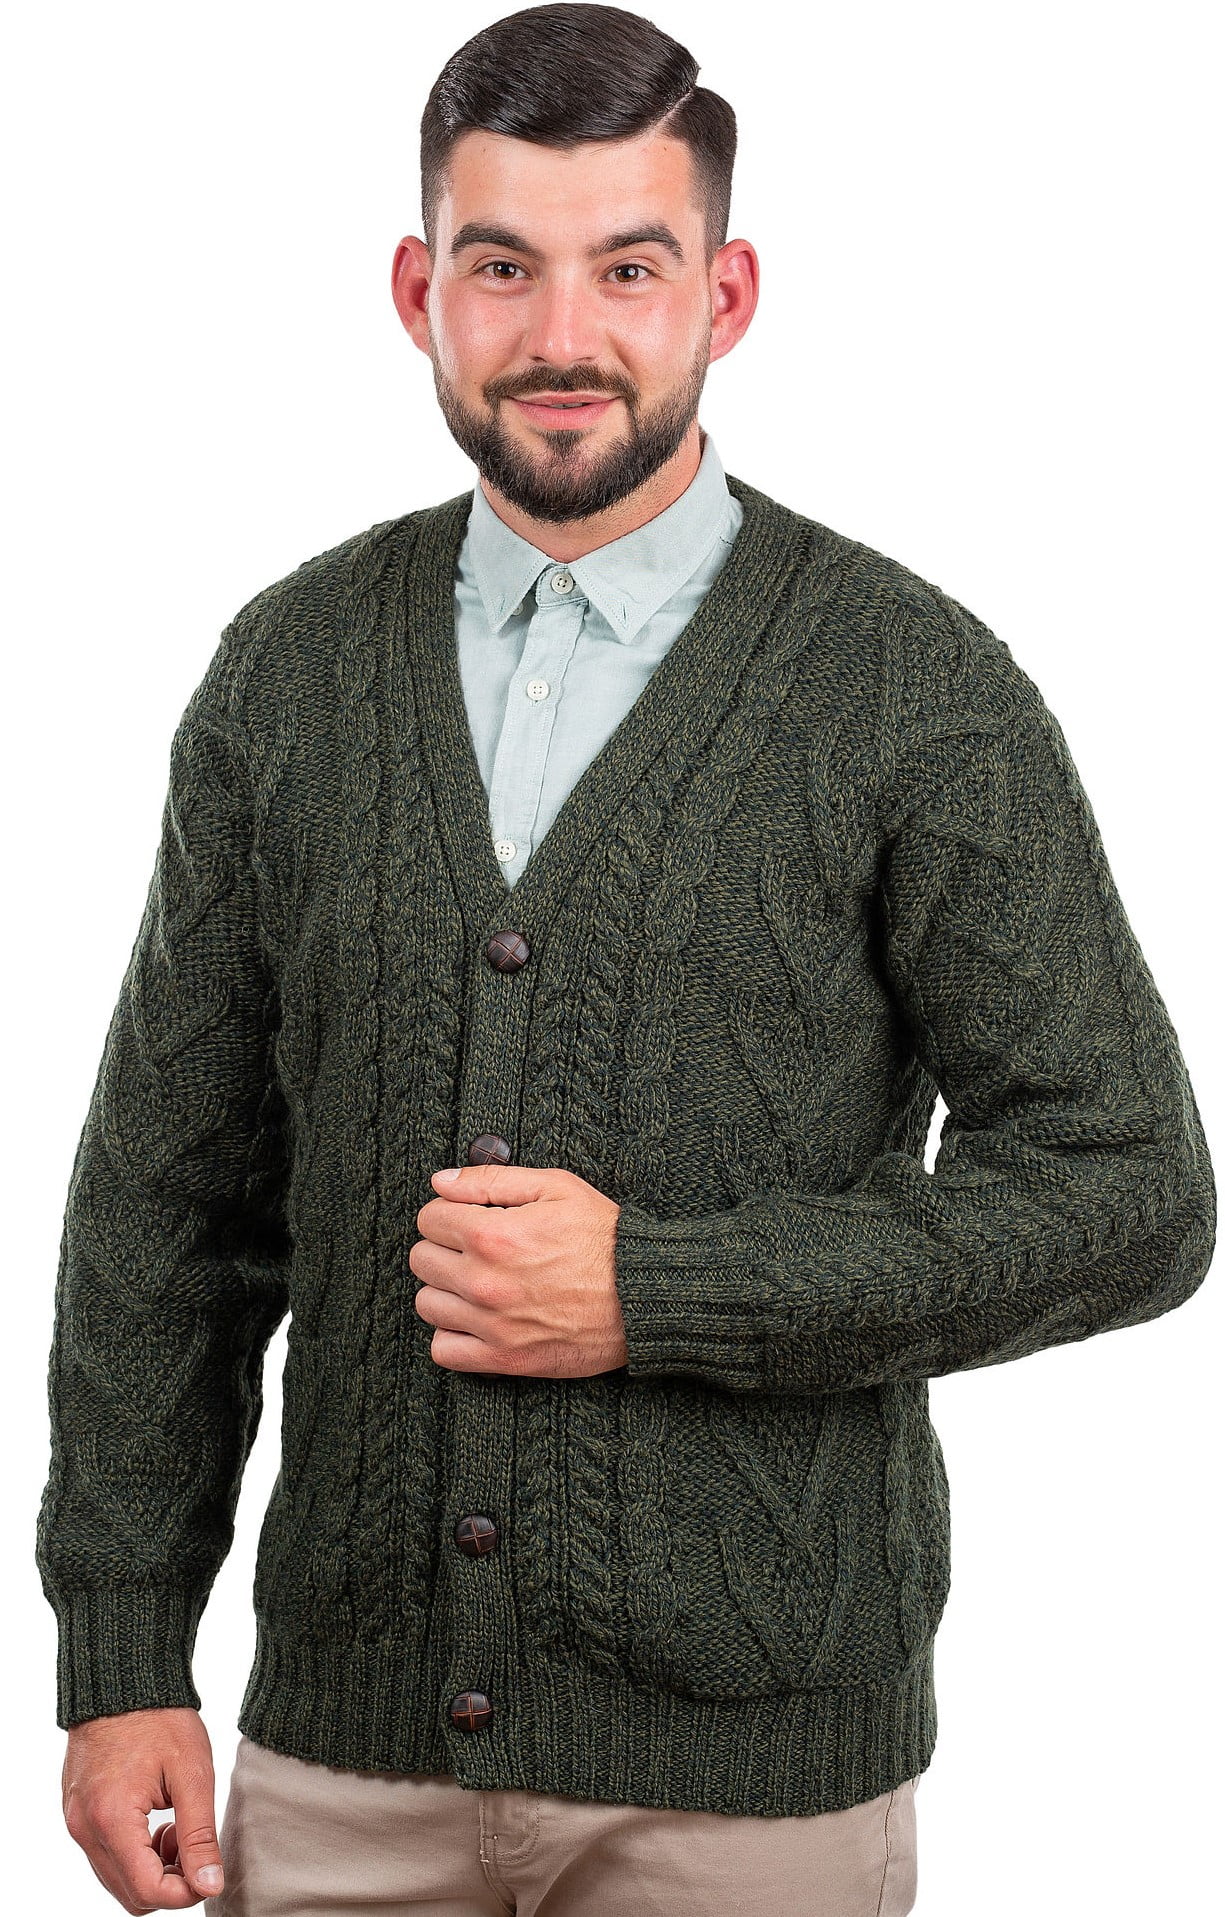 Saol Button Up V-Neck Cardigan Sweater 100% Merino Wool for Men Irish ...